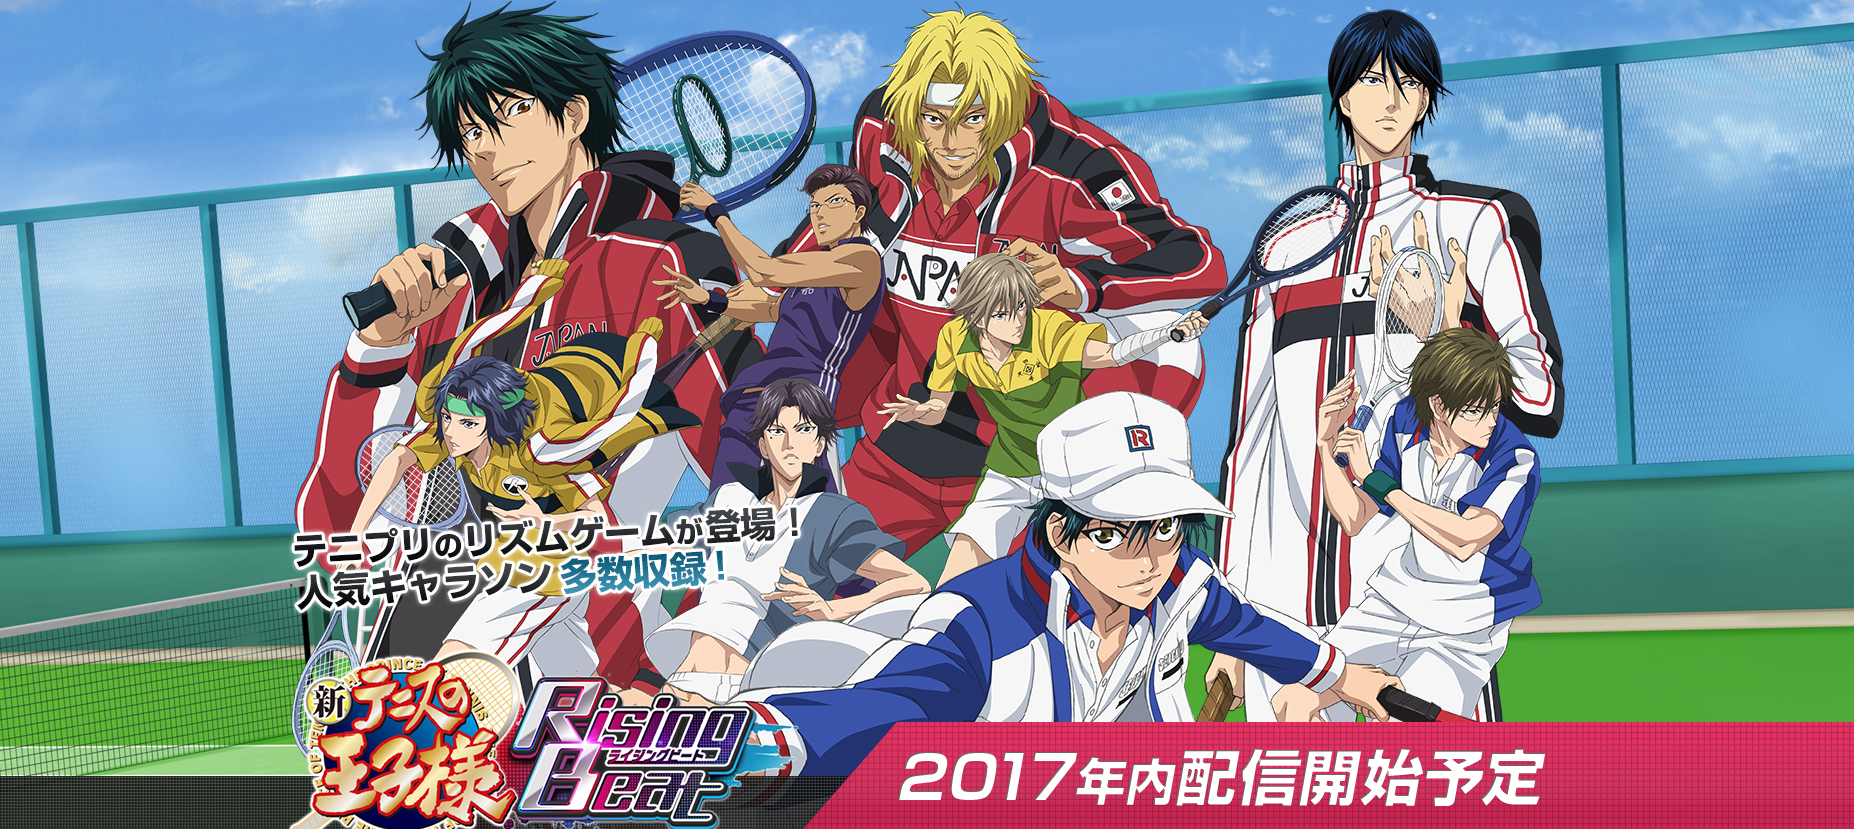 Banner of 新テニスの王子様 RisingBeat 5.12.0